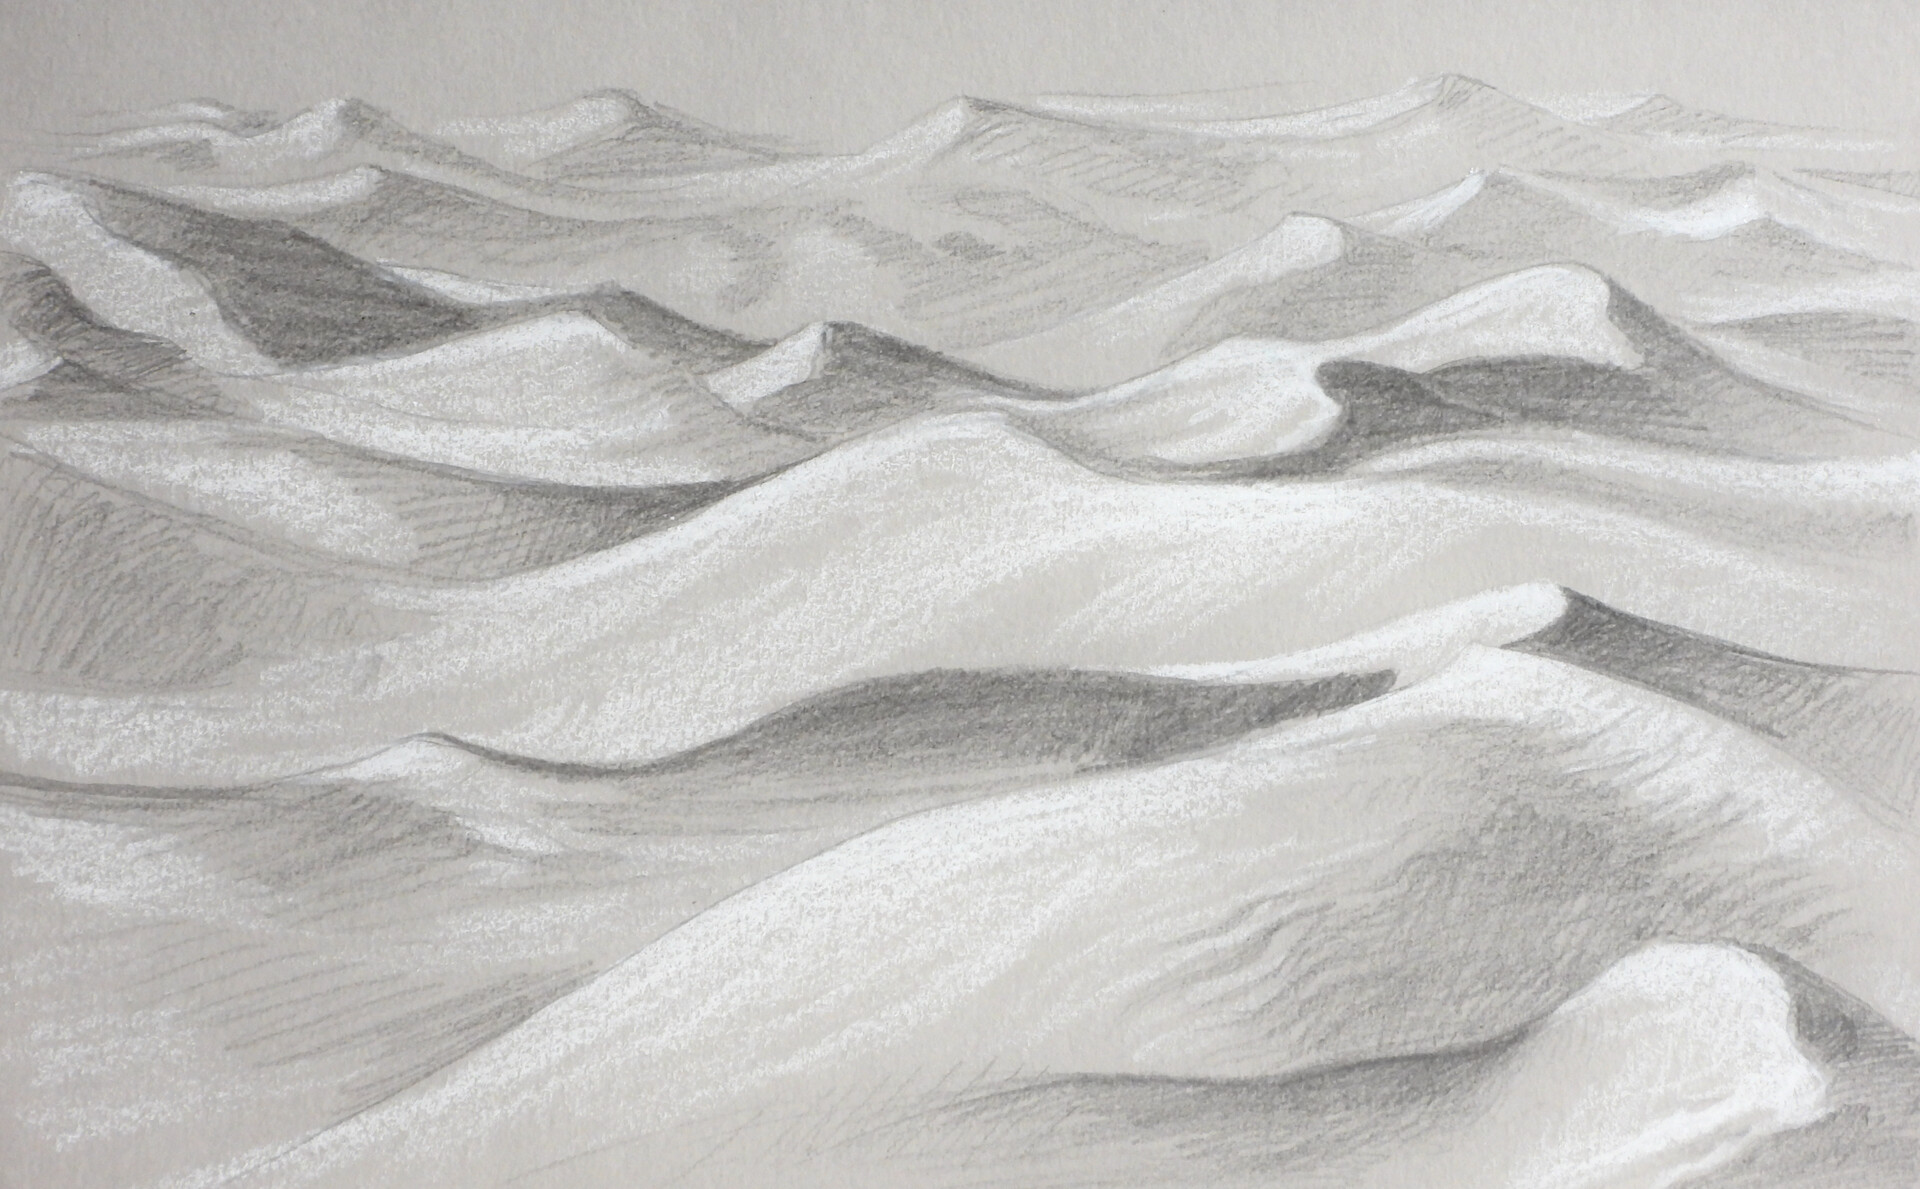 Dunes Sand Sketch Vector Images over 180